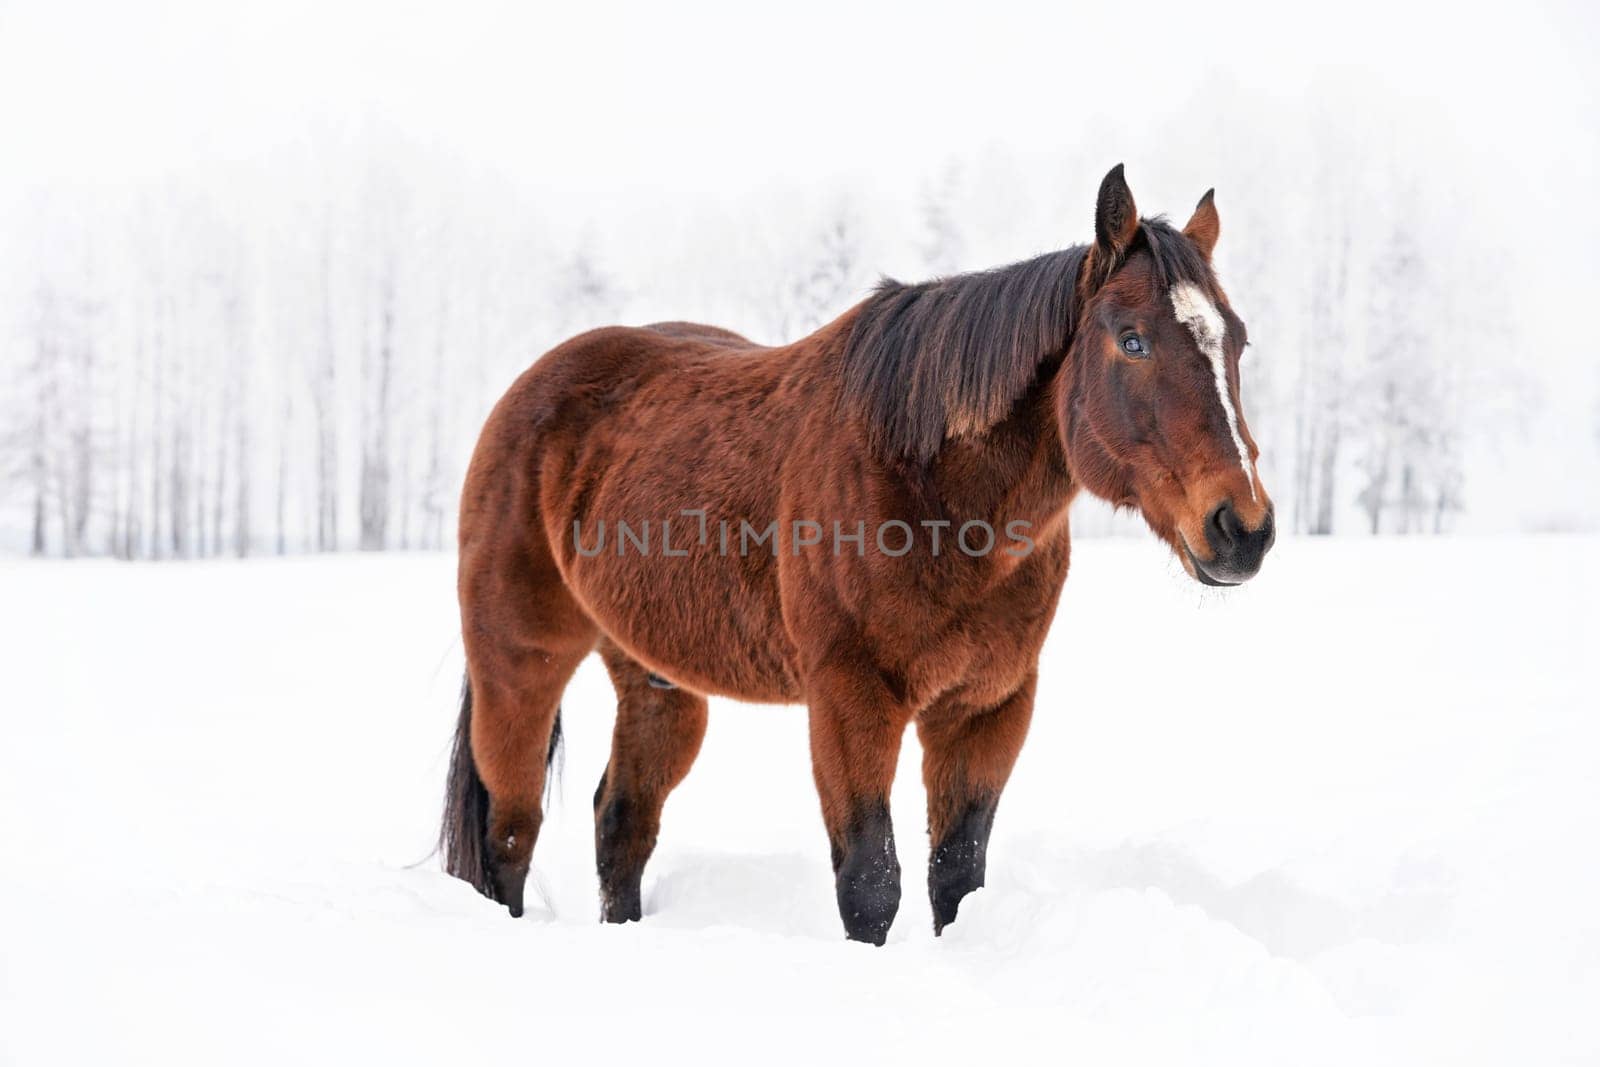 Dark brown horse walks on snow, blurred threes in background by Ivanko